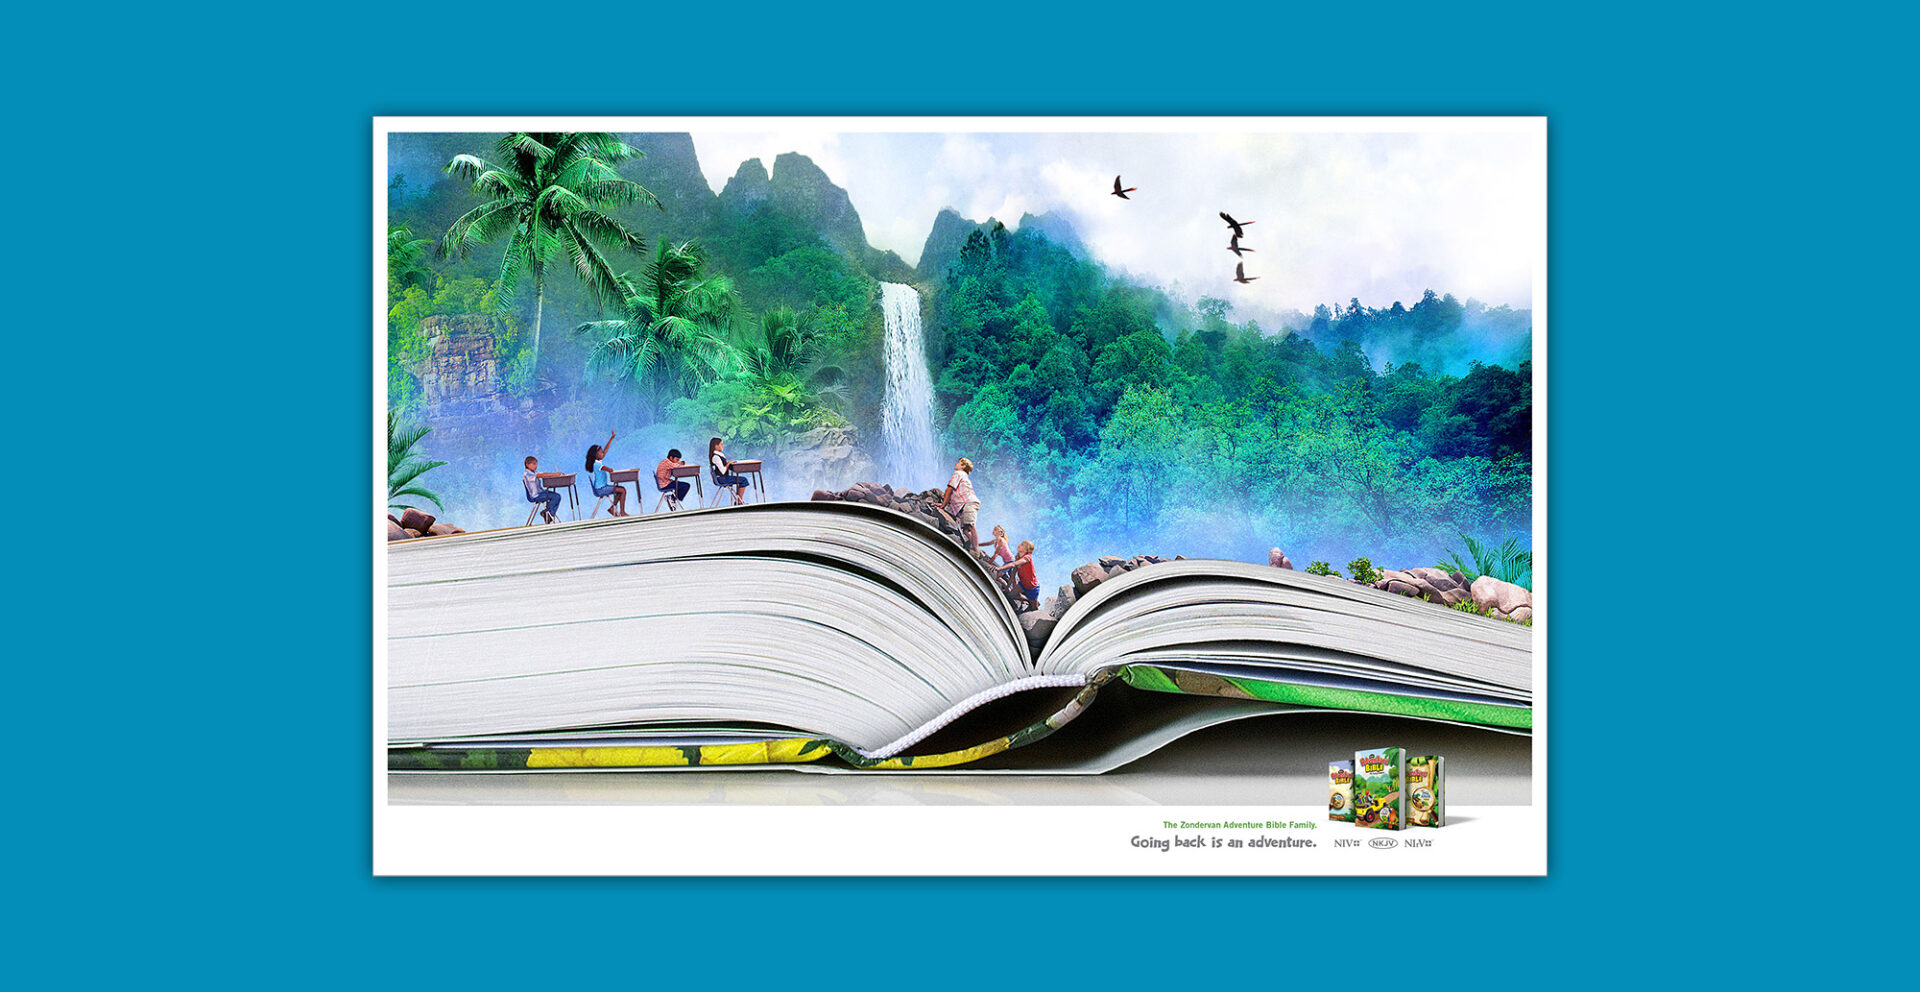 Print spread advertisement for Zondervan Adventure Bible Family